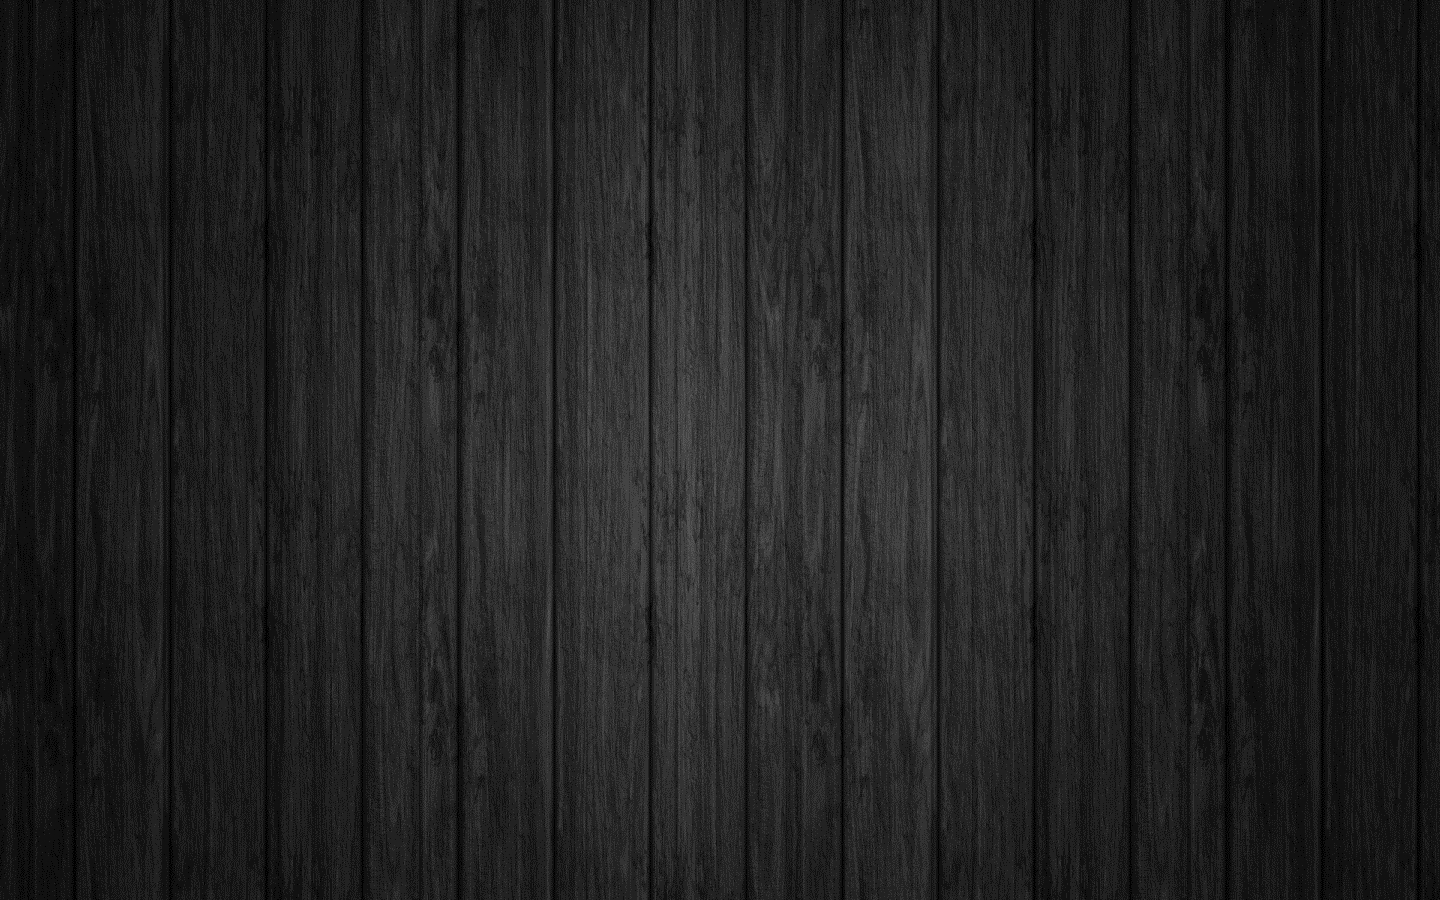 Black Wood 1 Mac Wallpaper Download | Free Mac Wallpapers Download